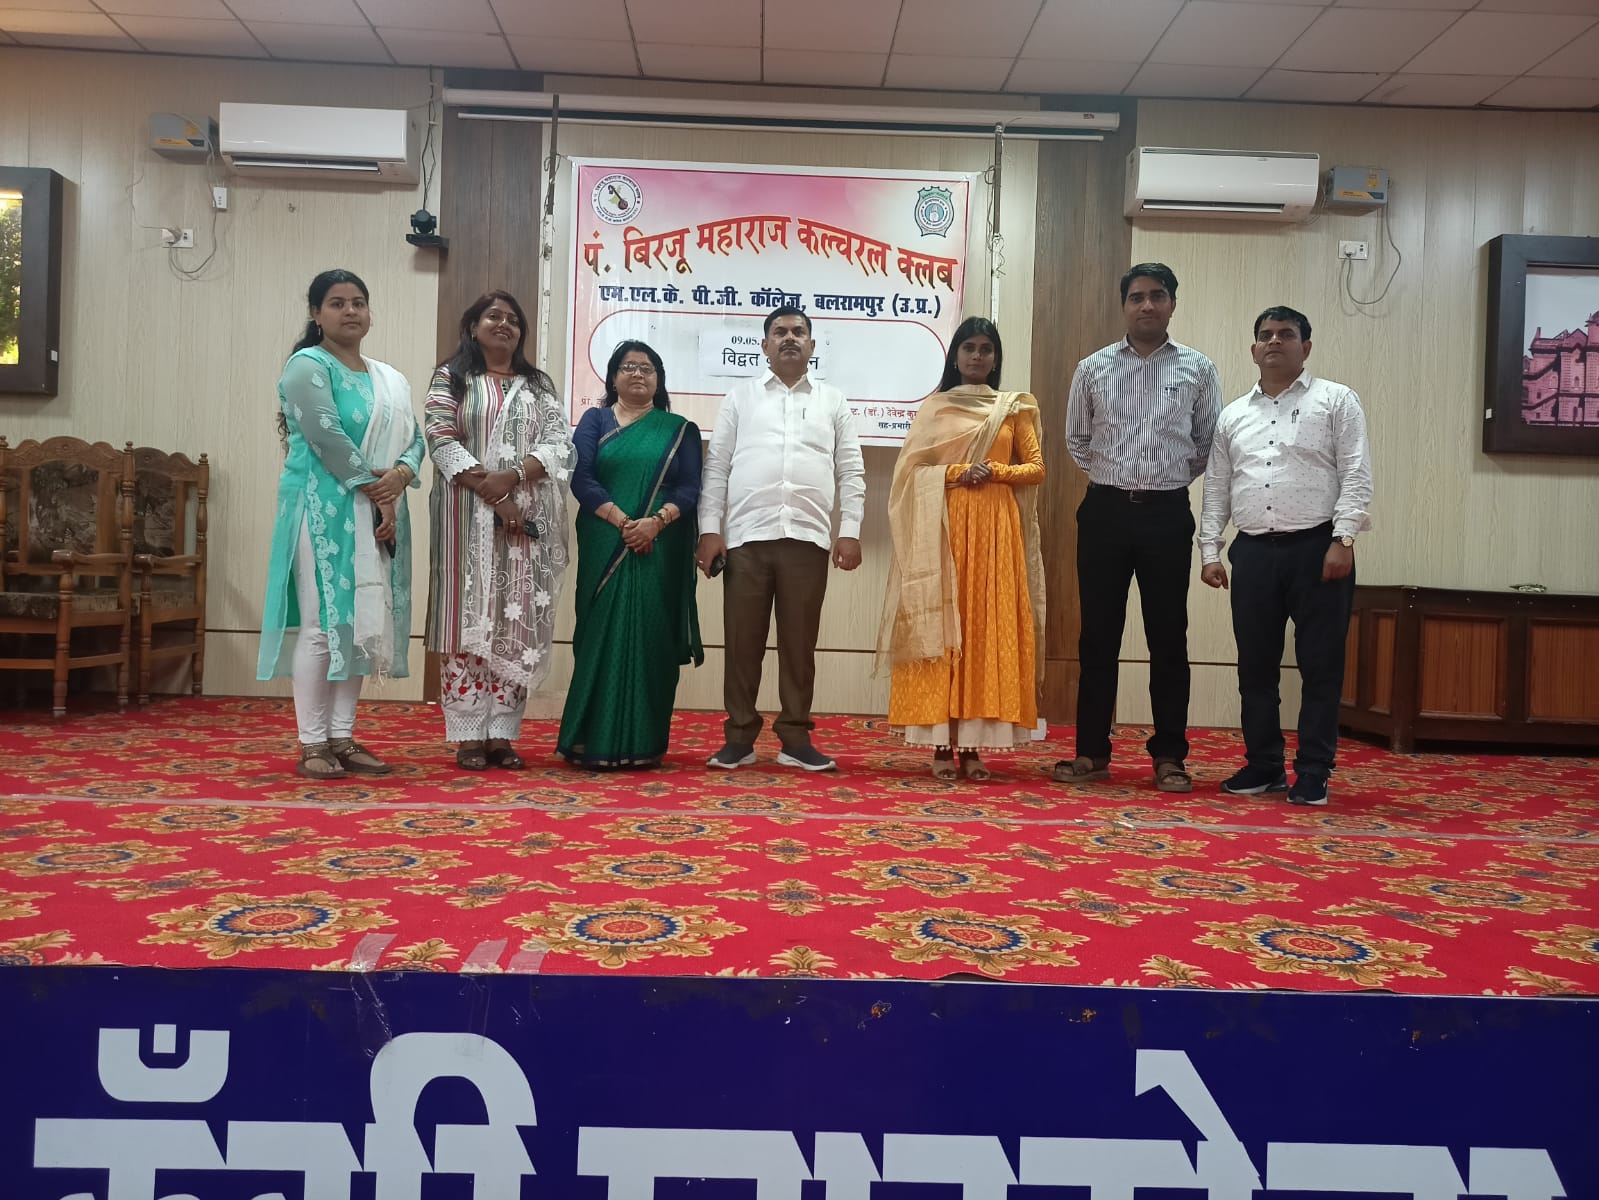 Pandit Birju Maharaj cultural programs were organized at MLK PG College Balrampur Auditorium.